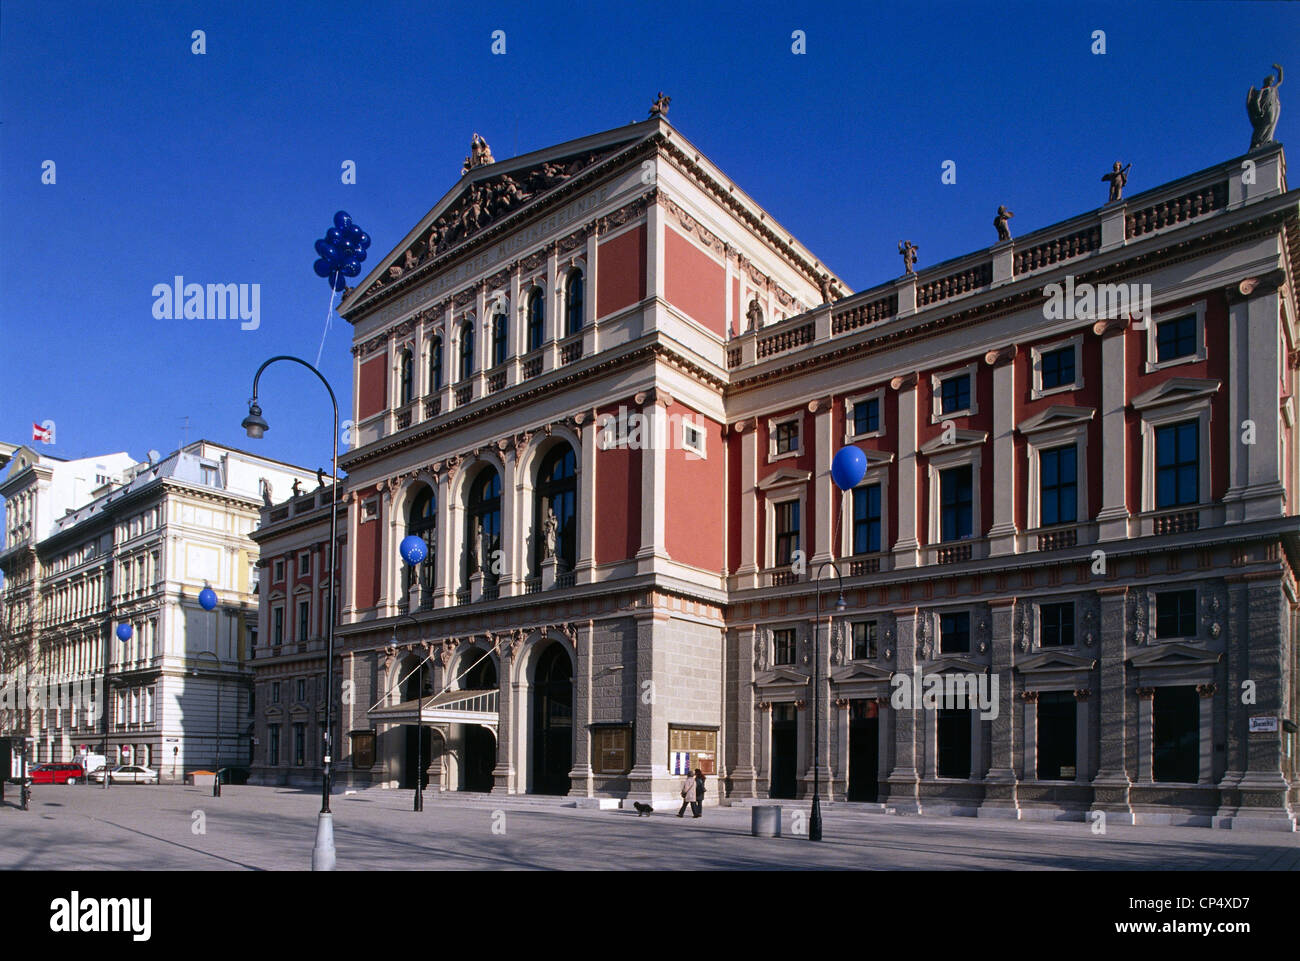 Austria - Vienna. Musikverein, a concert hall built by the Gesellschaft der Musikfreunde (Society of Friends of Music) in 1870. Stock Photo